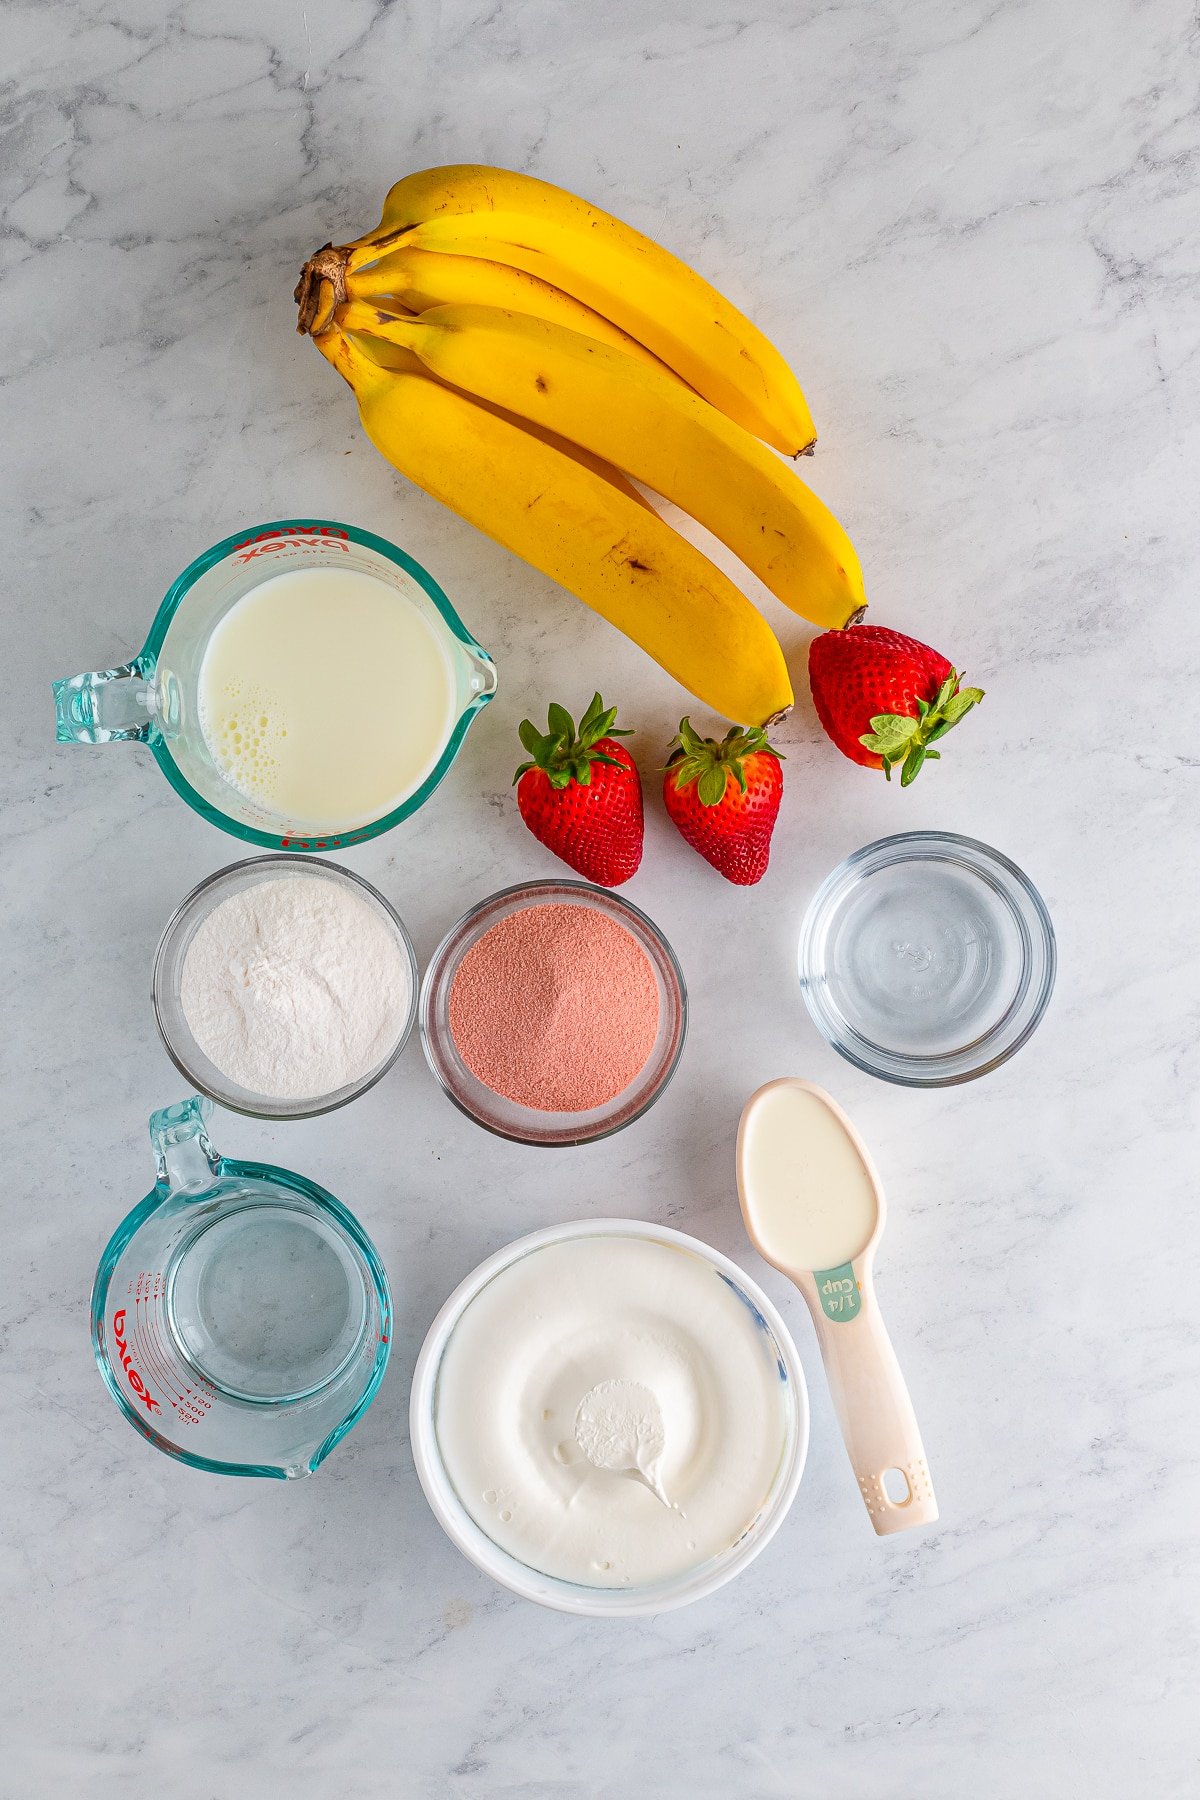 ingredients needed to make banana pudding shots